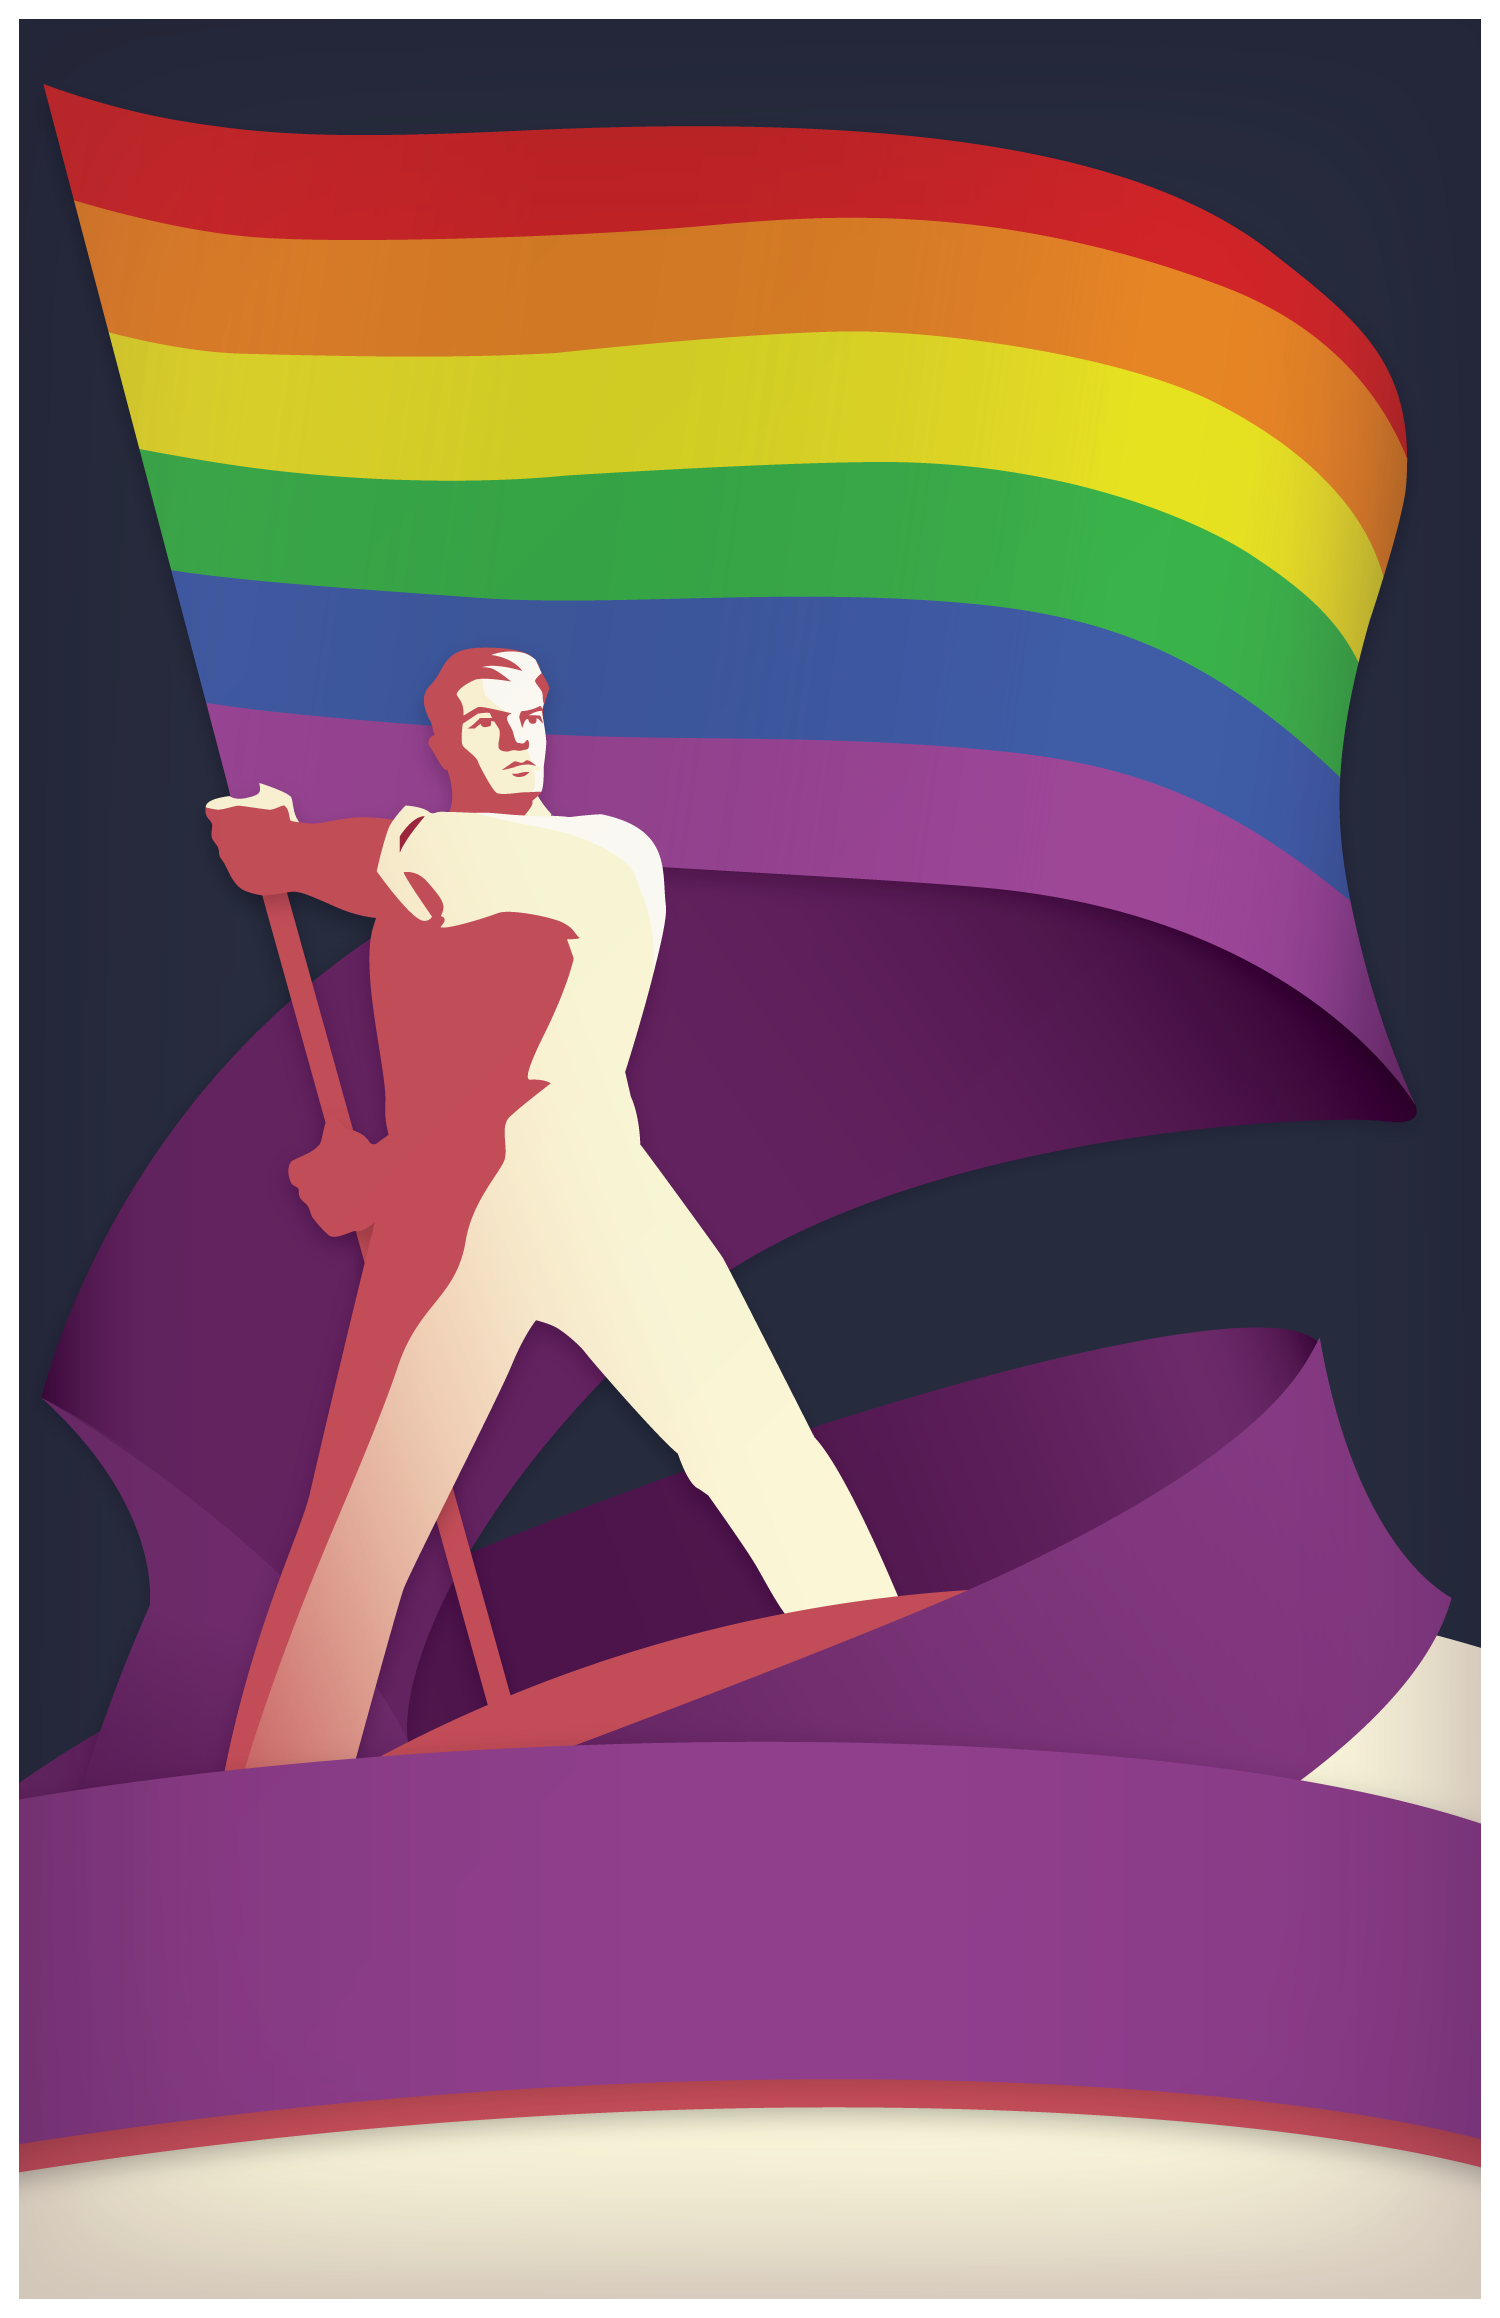 Illustration of man holding a rainbow flag proudly